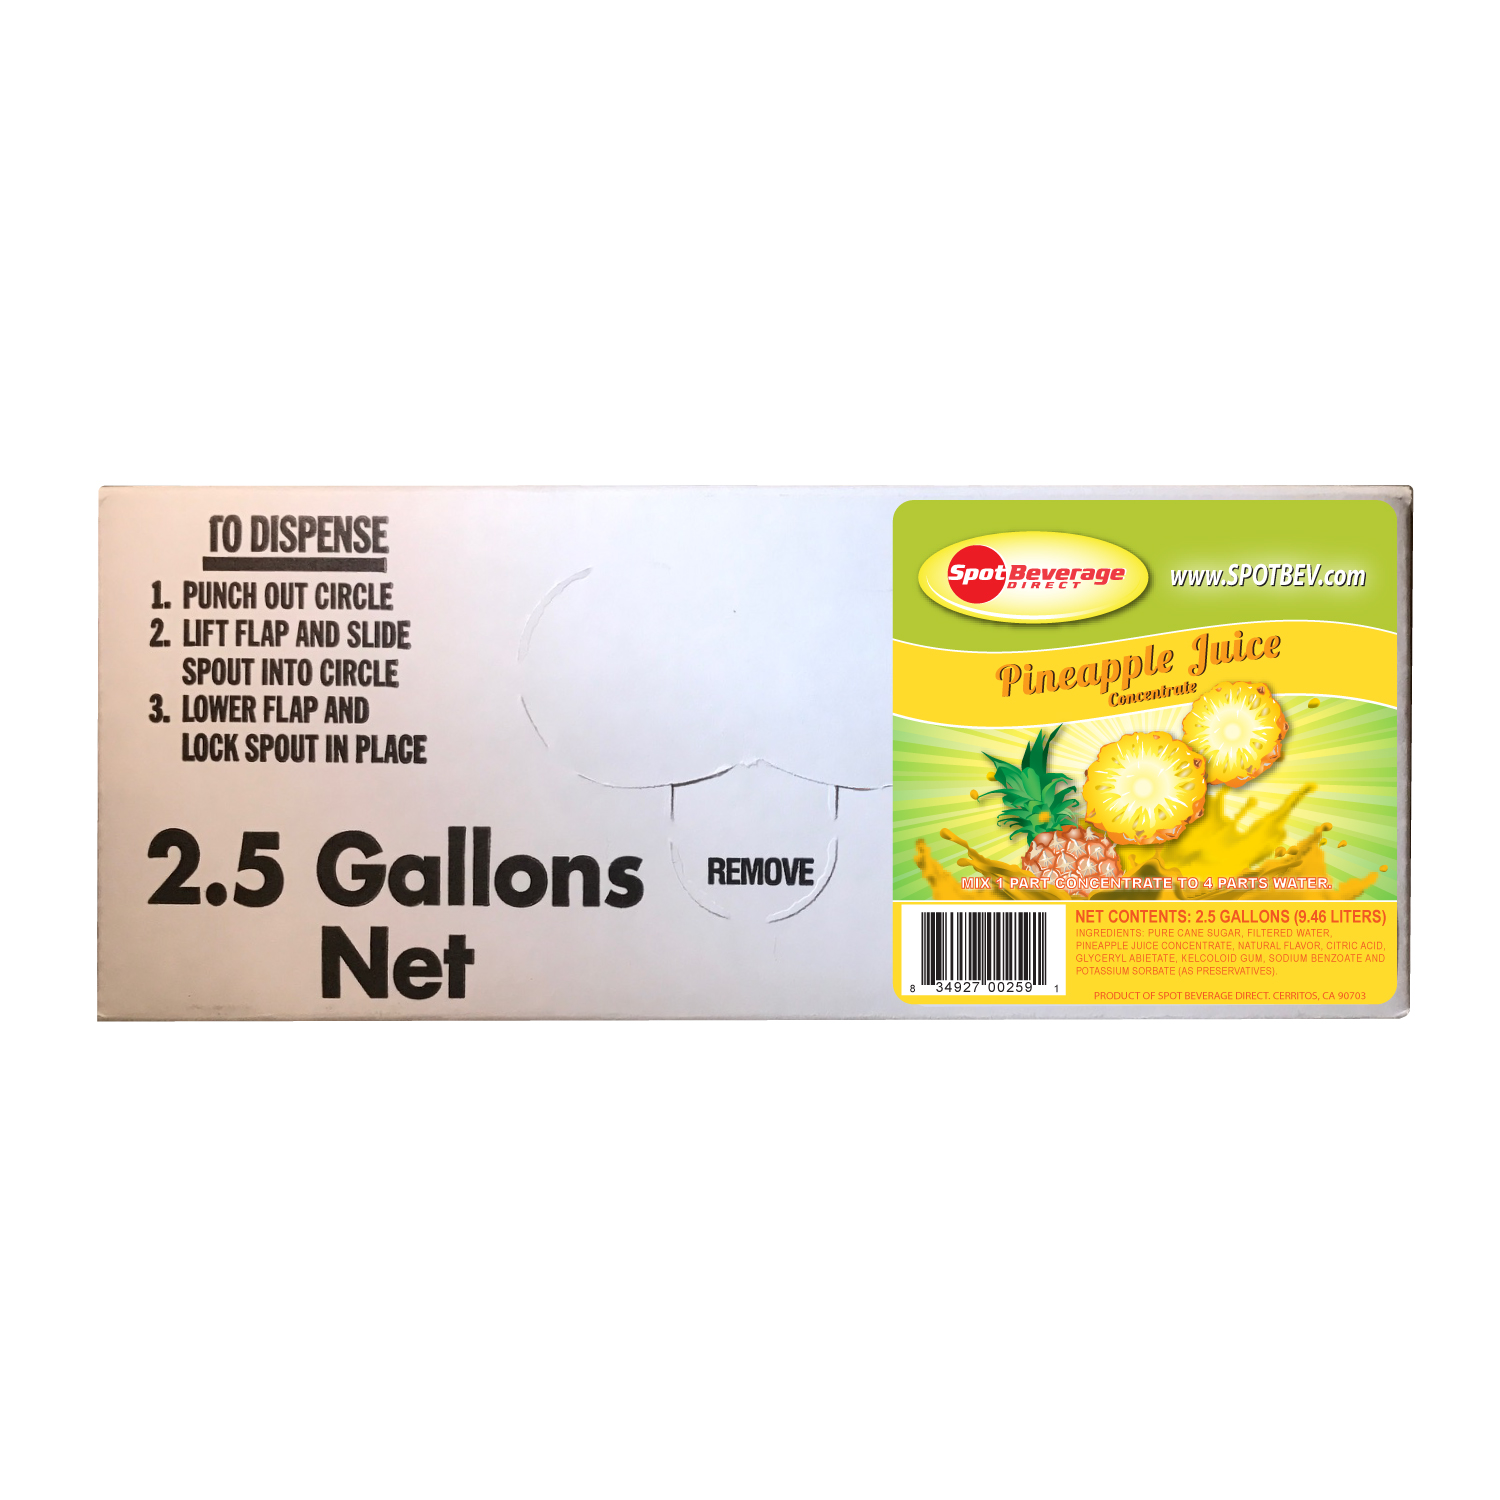 Spot Premium Pineapple Juice 2.5 gal. Bag-n-Box (1 to 4 Concentrate)